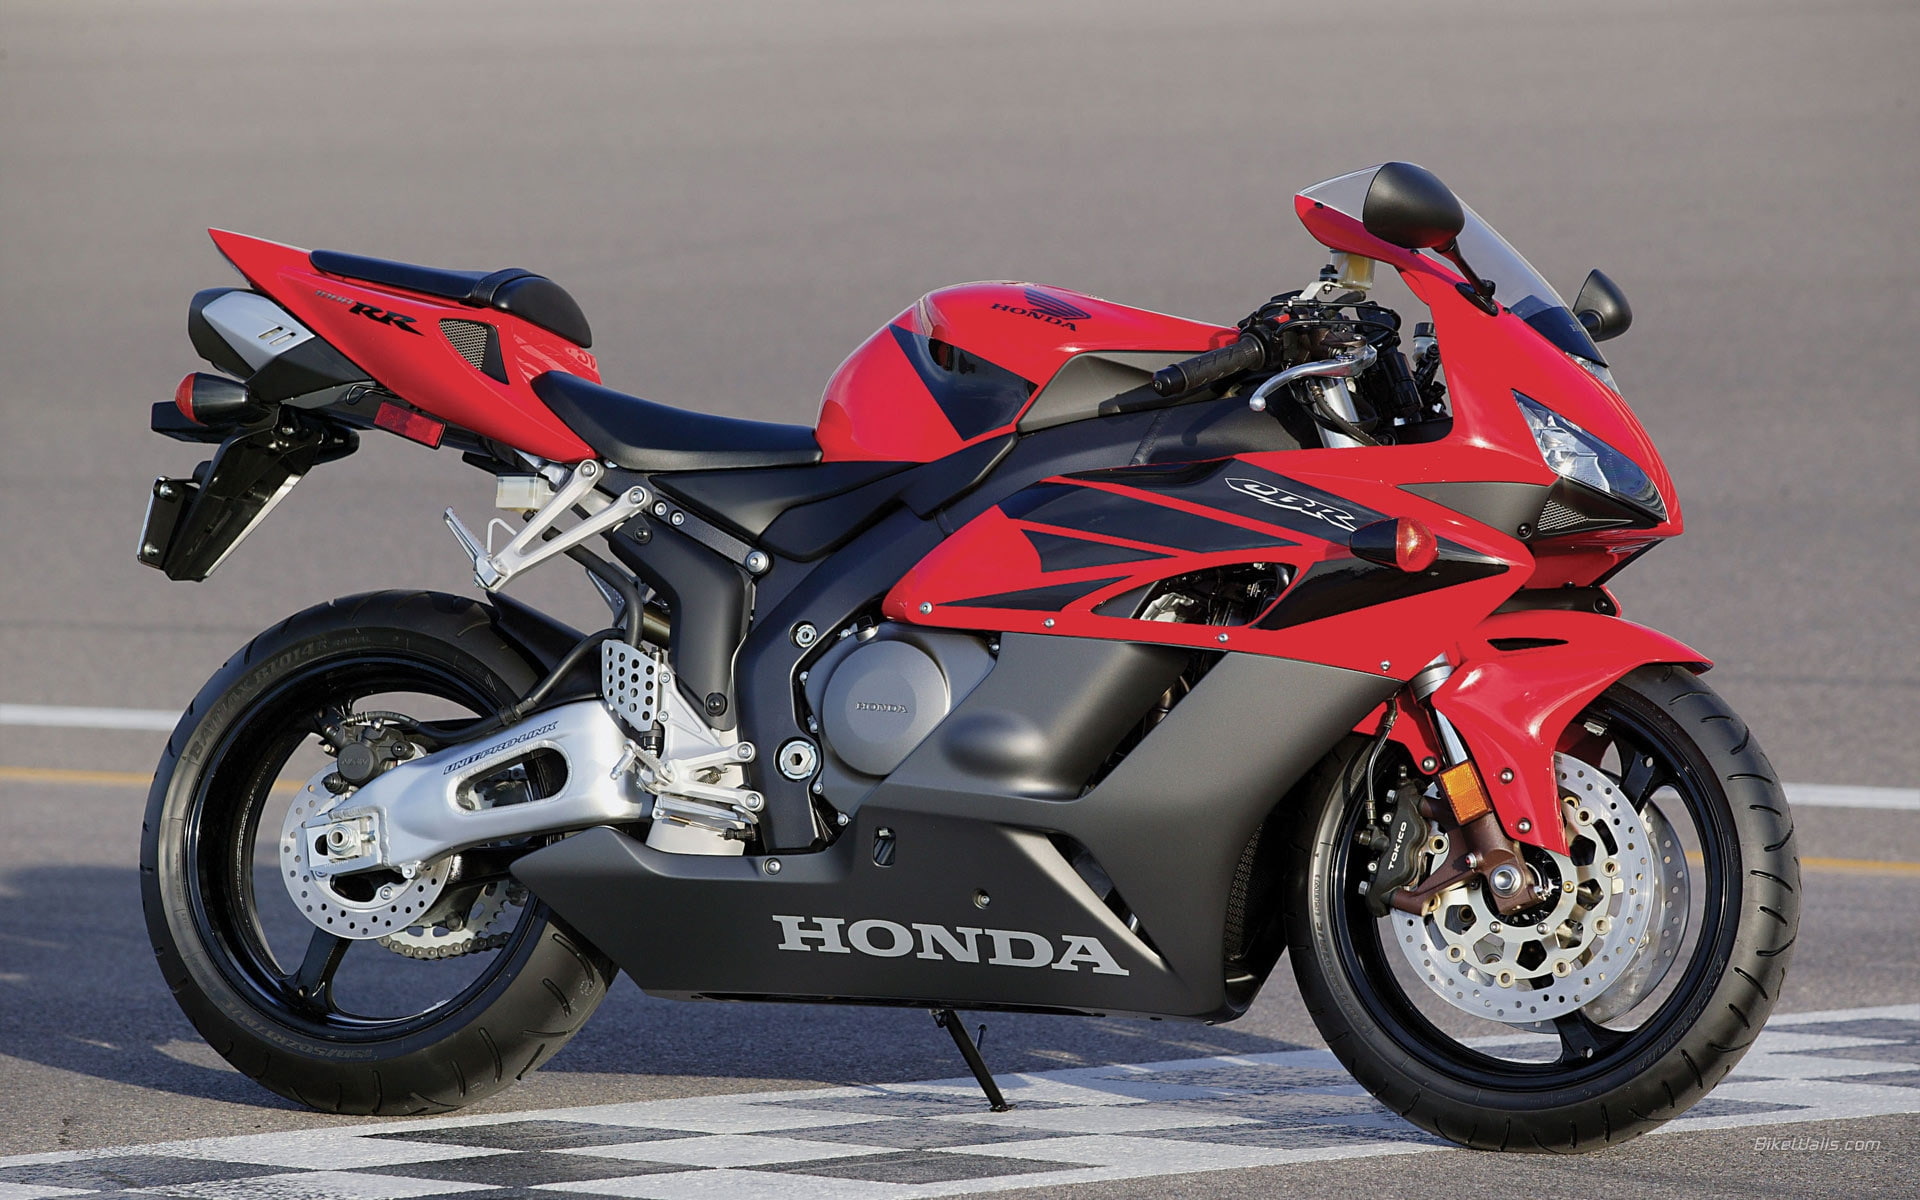 Gorgeous Honda CBR1000rr, red and black honda street sport motorcycle